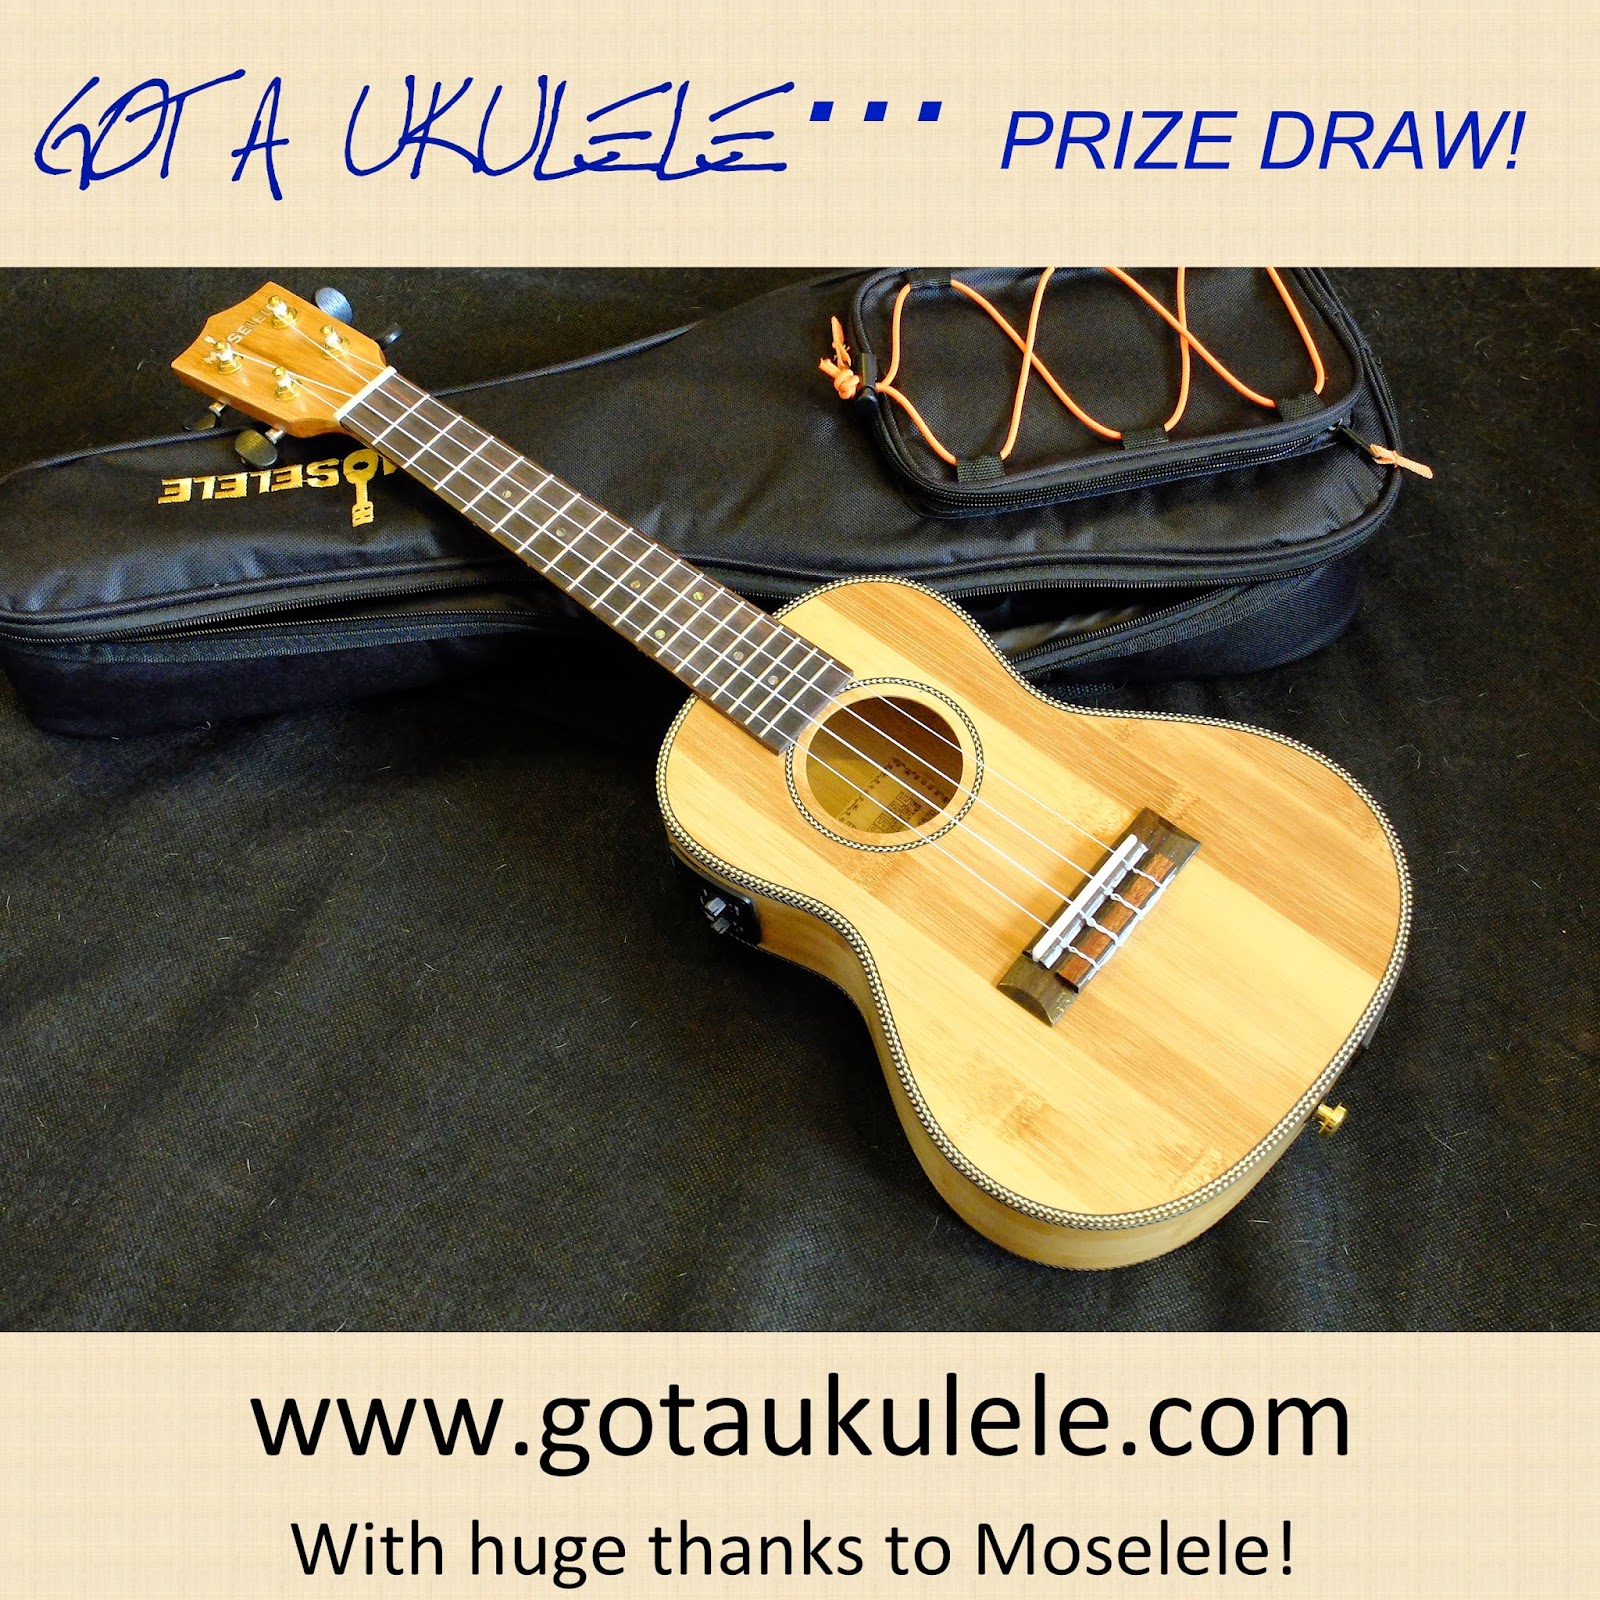 Moselele ukulele giveaway